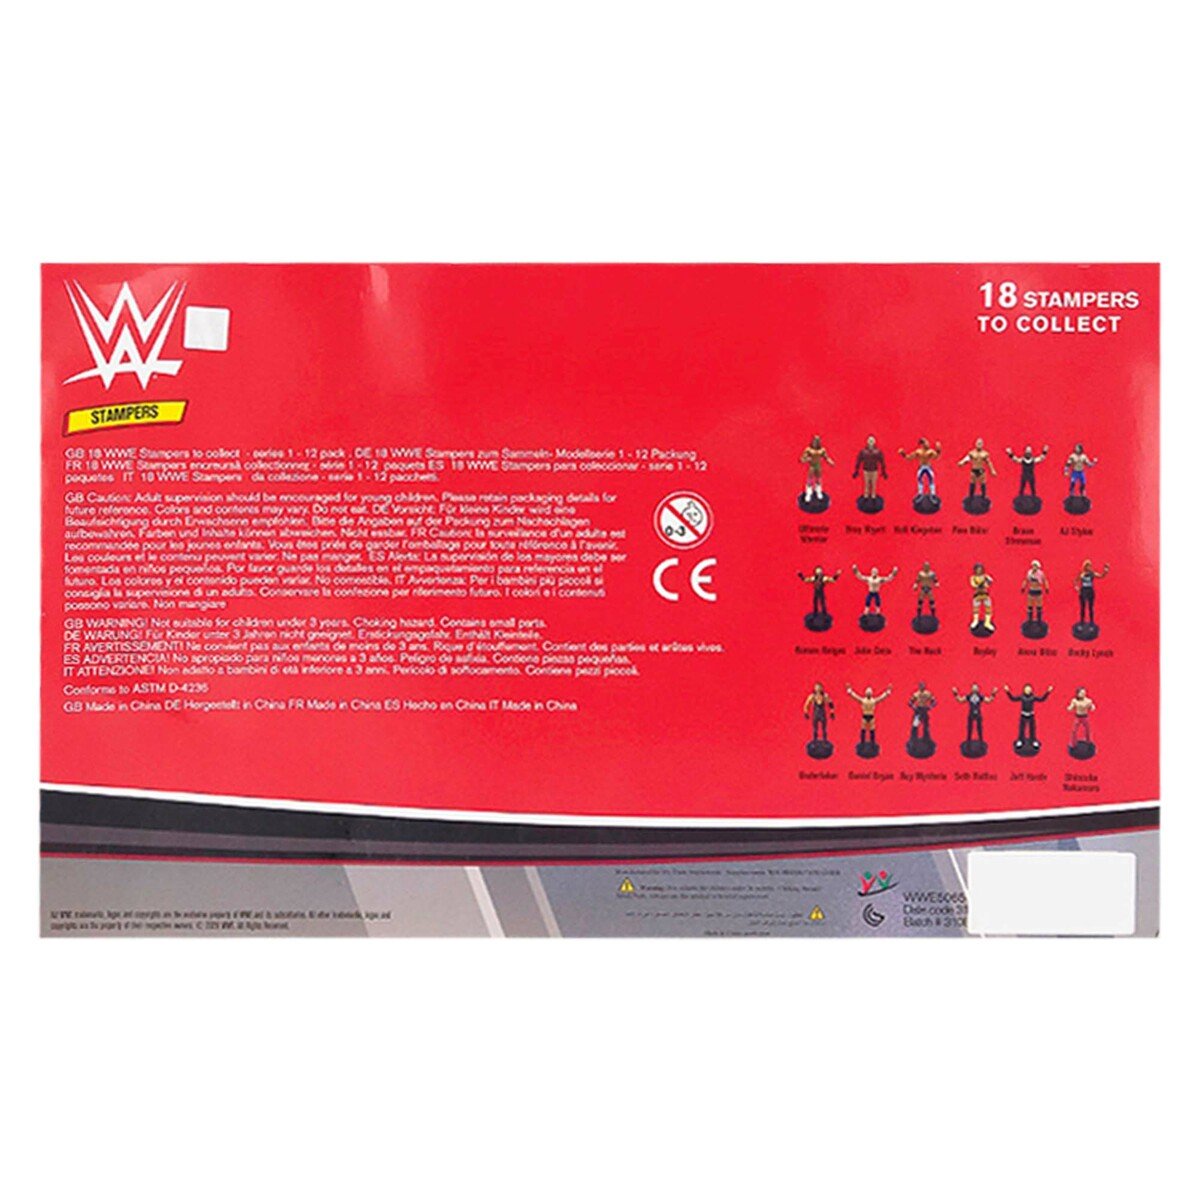 WWE Figure 12 PC Pack Deluxe Box Topper, Beige Combo